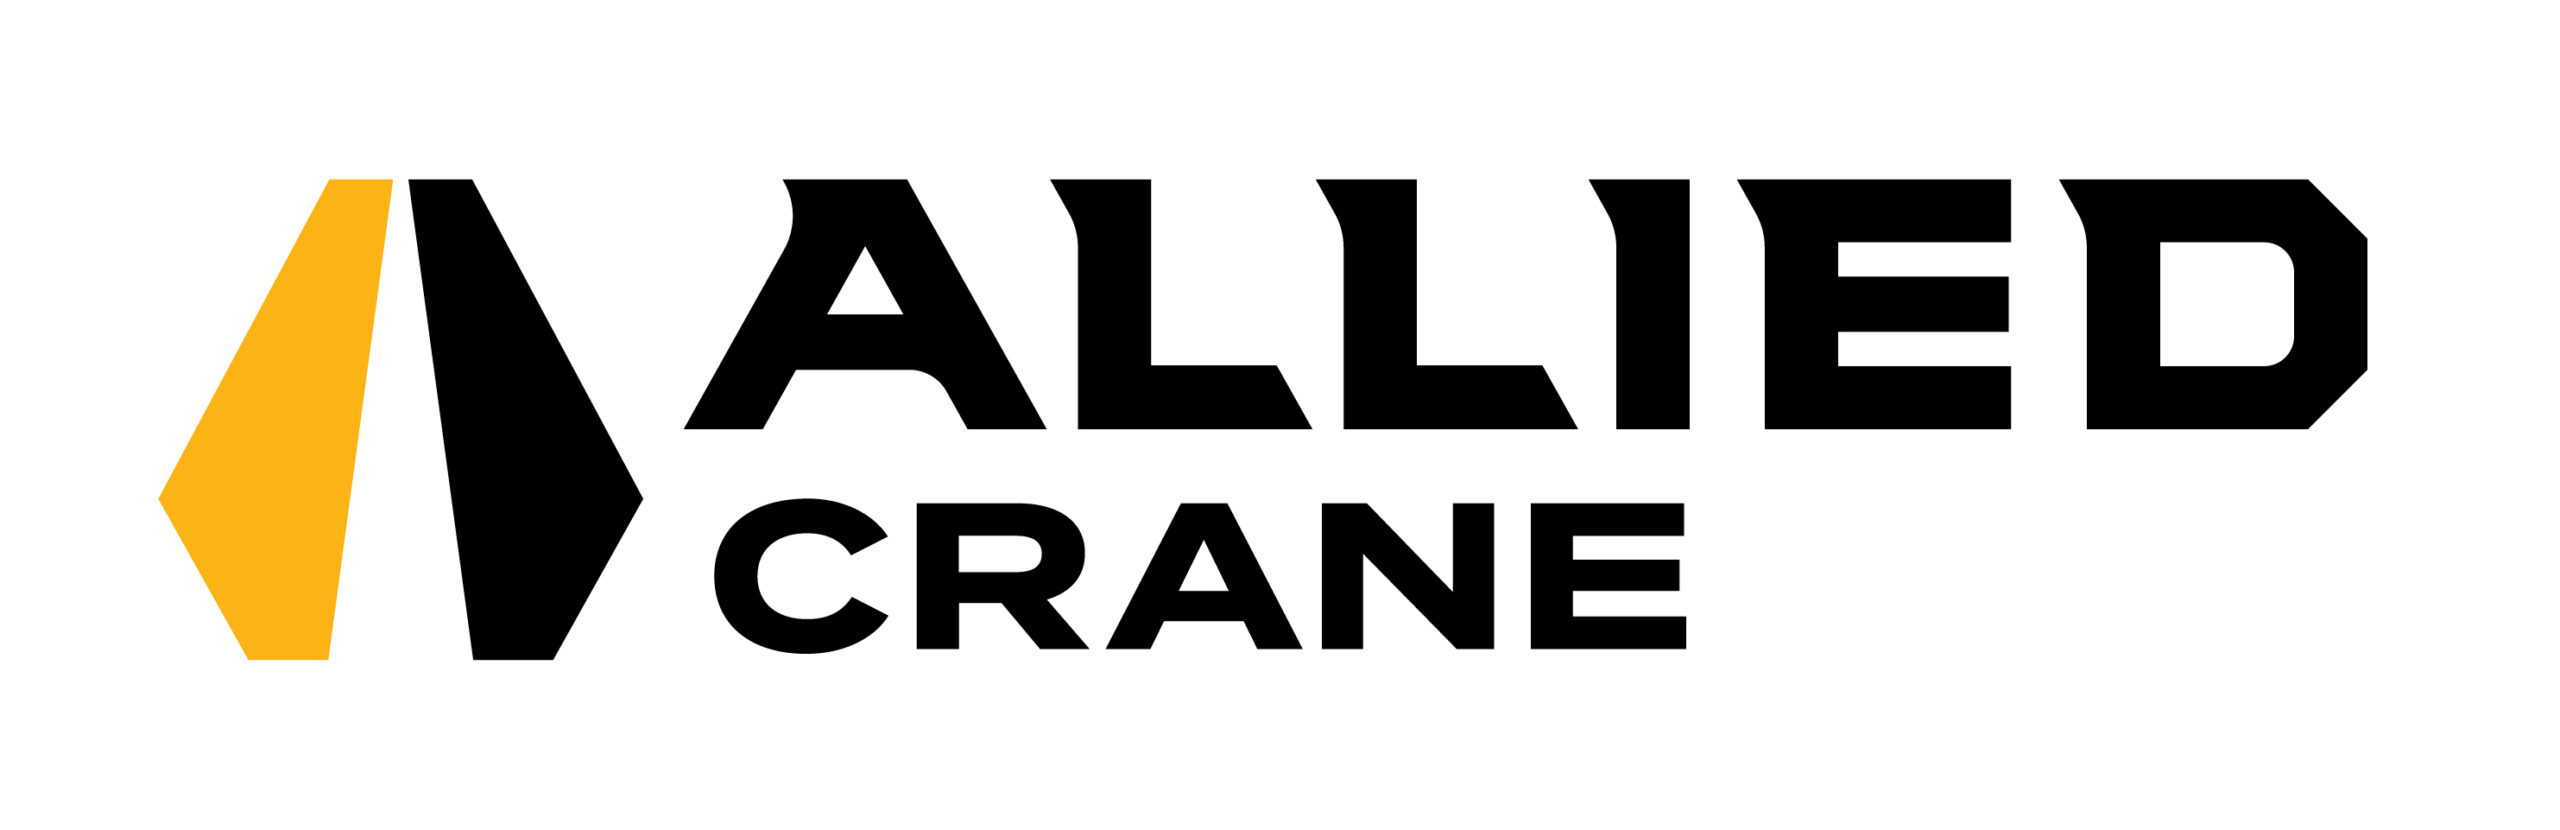 allied crane logos fa 01 1 scaled